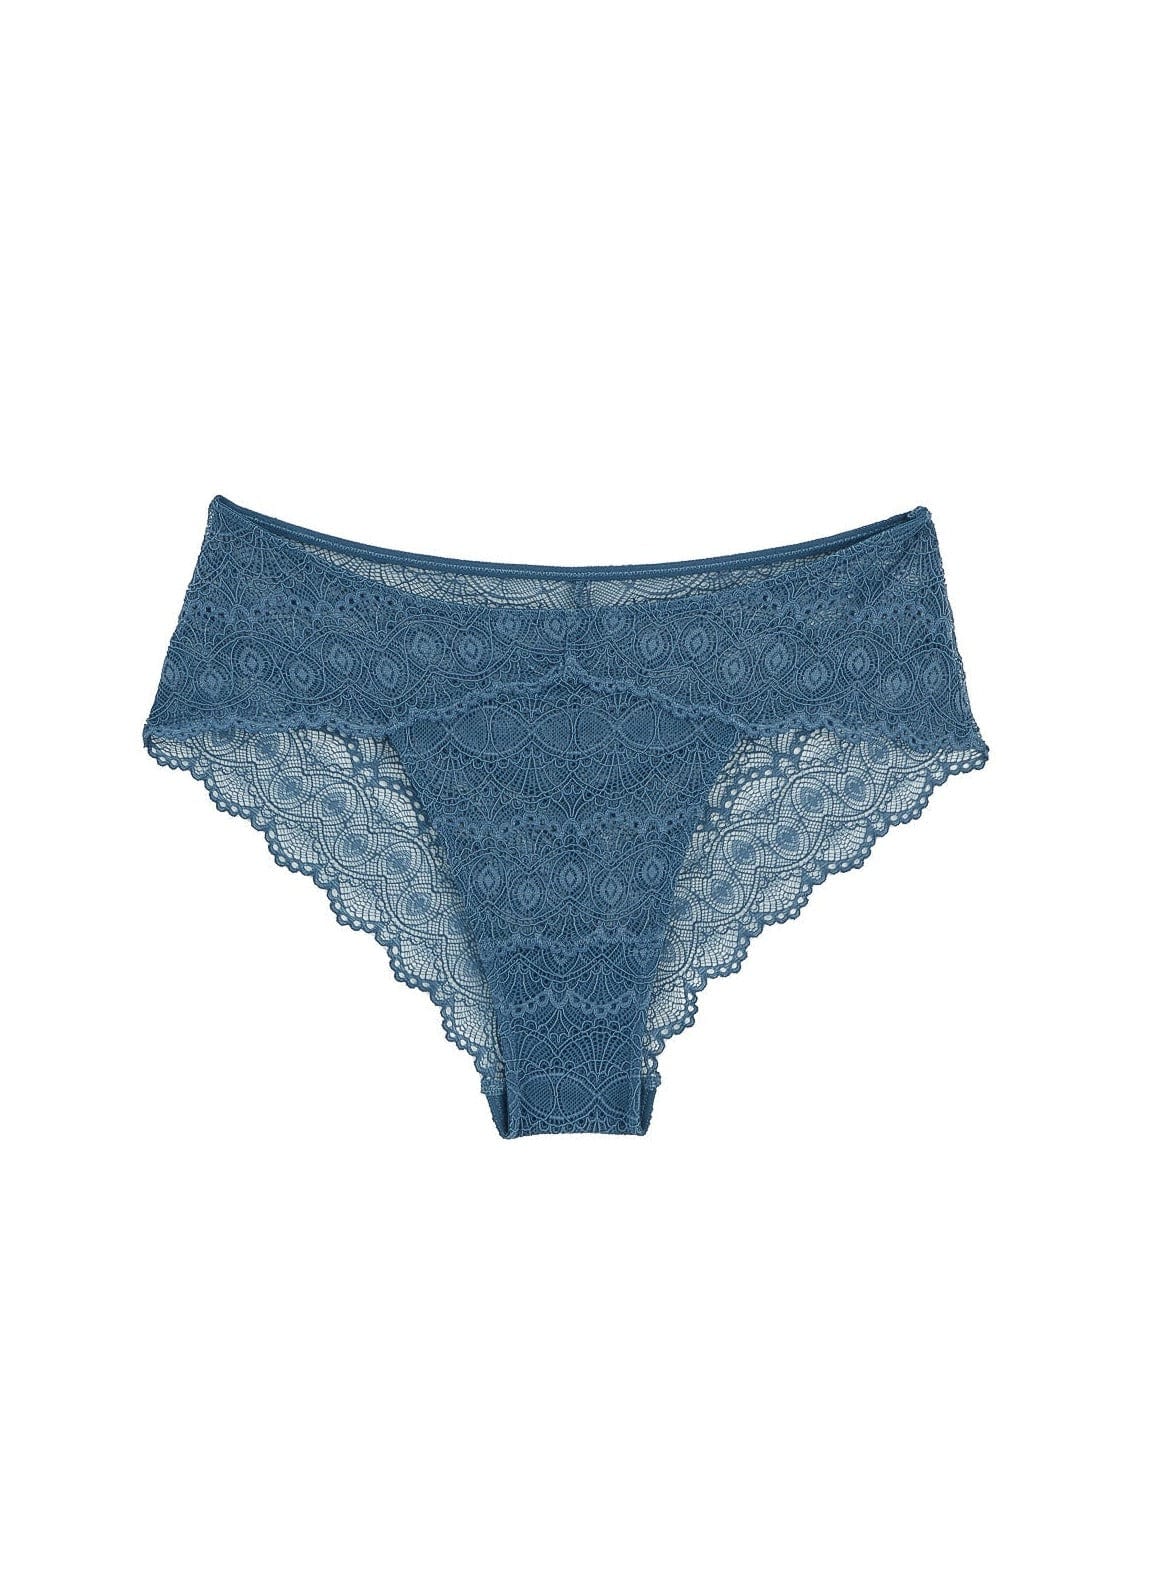 Else Underwear Cornflower / XS Camellia Bikini Brief